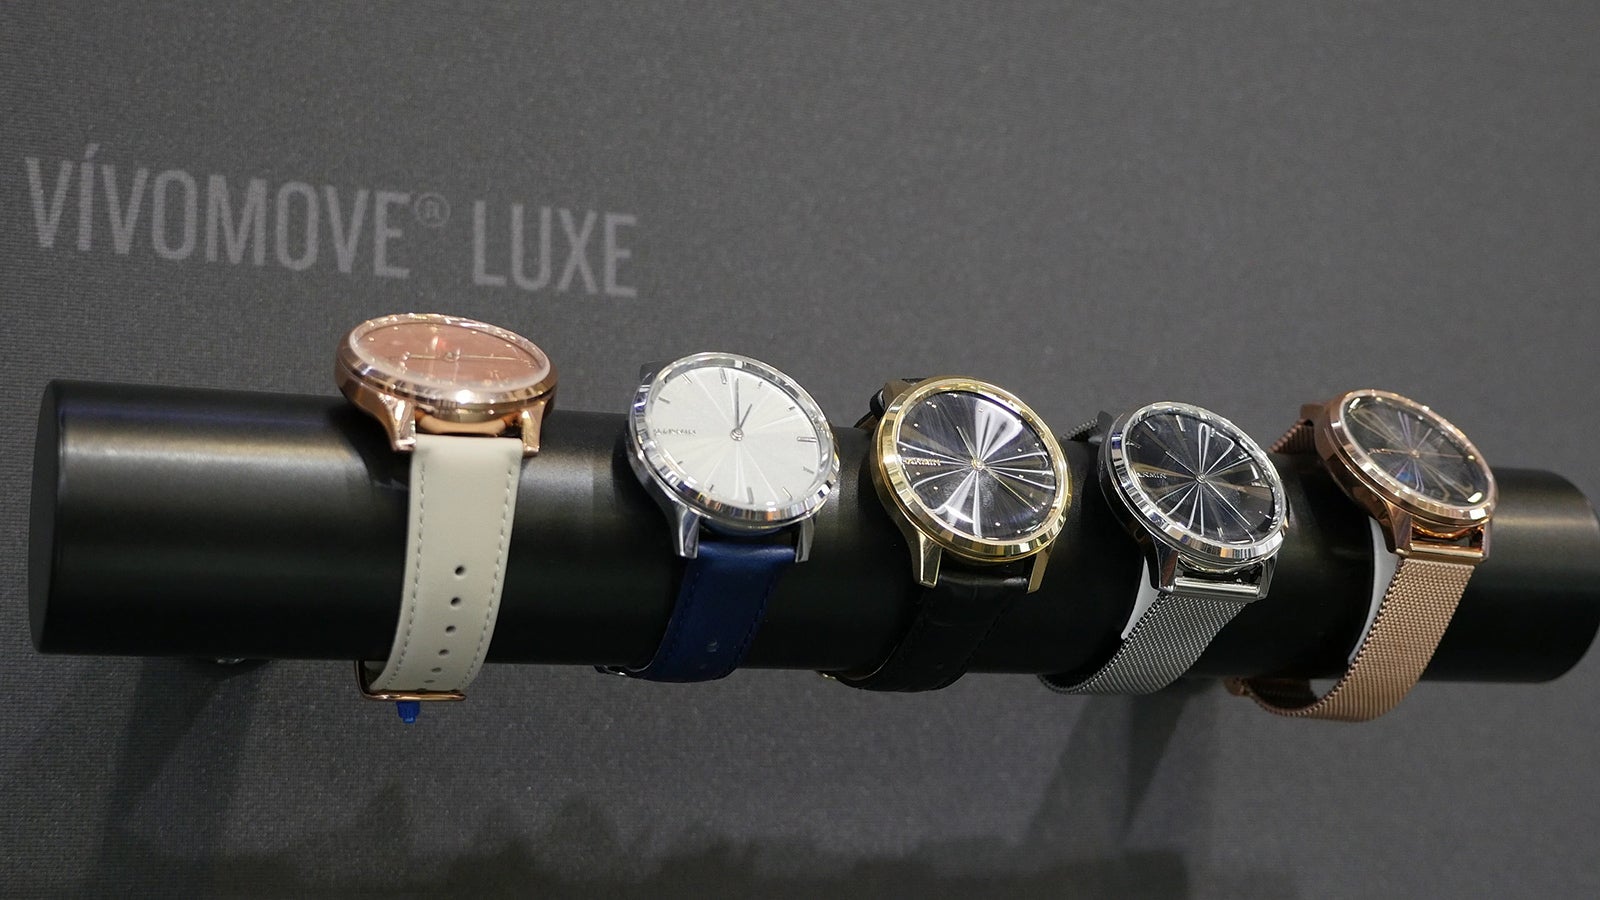 Vivomove Luxe - Garmin Vivomove 3 series: an incredibly classy watch with a hidden smart display (hands-on)